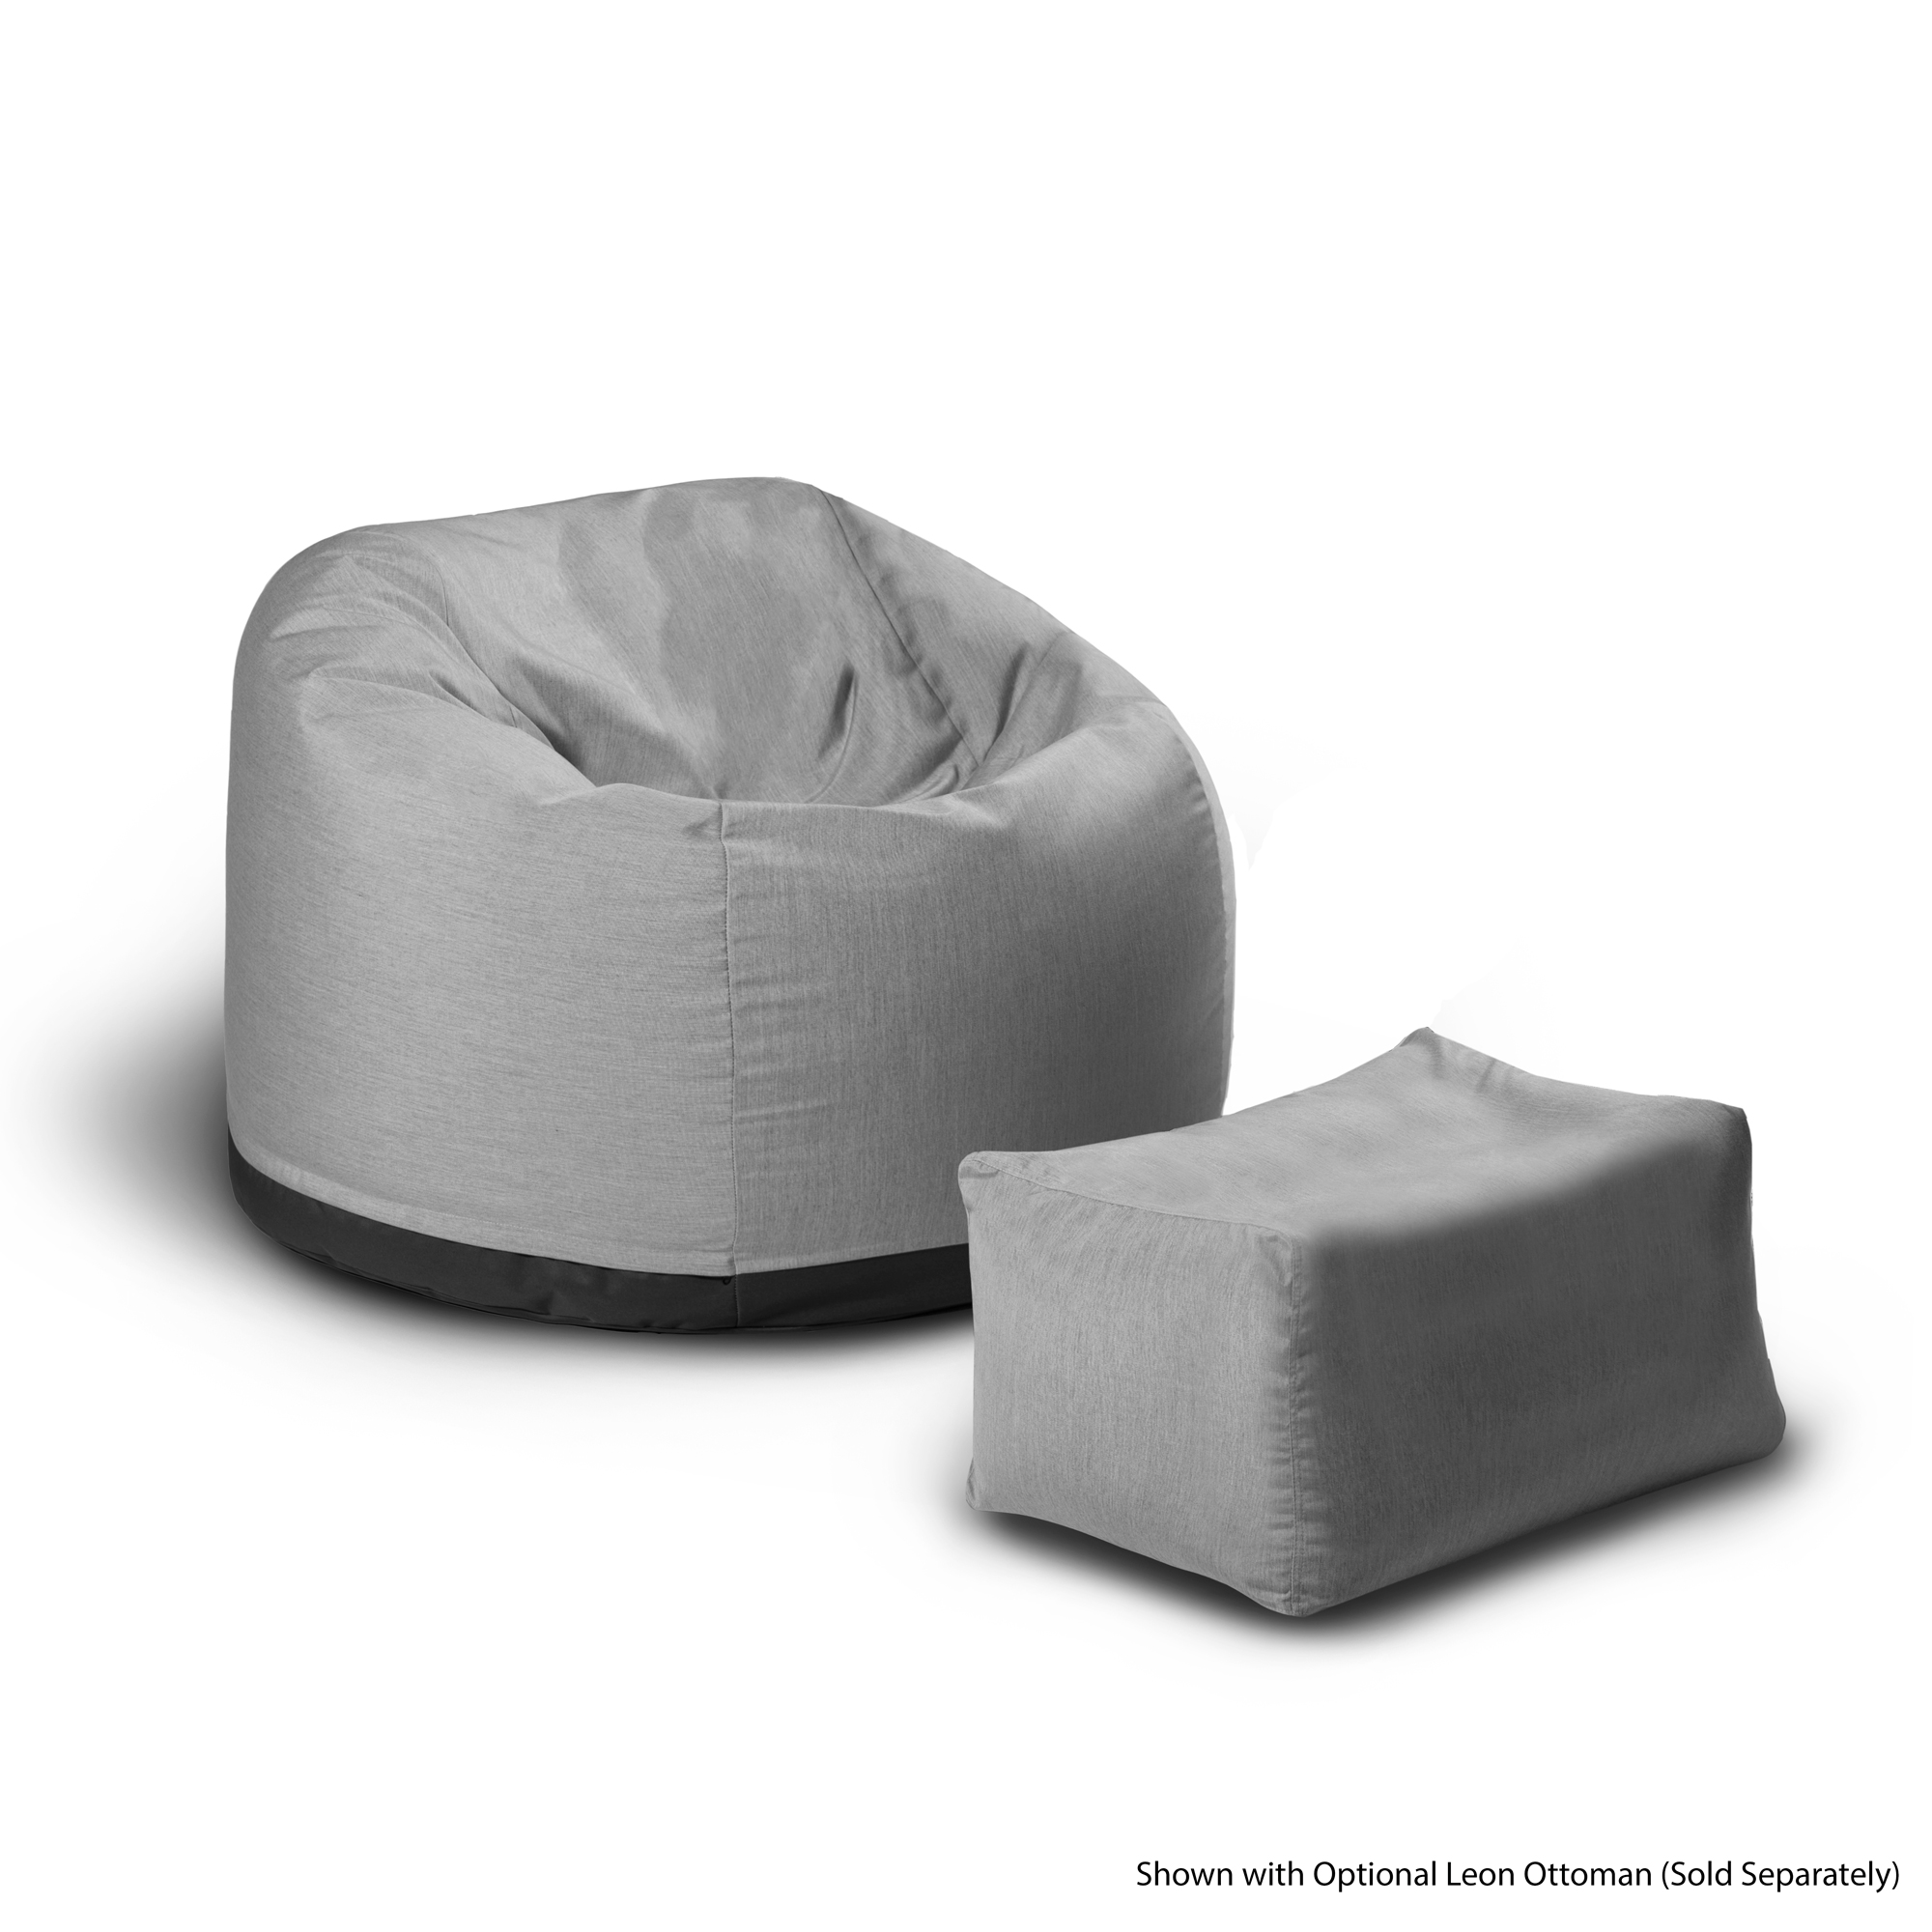 Jaxx Palmetto Large Round Outdoor Bean Bag Club Chair - Sunbrella Granite - image 2 of 4